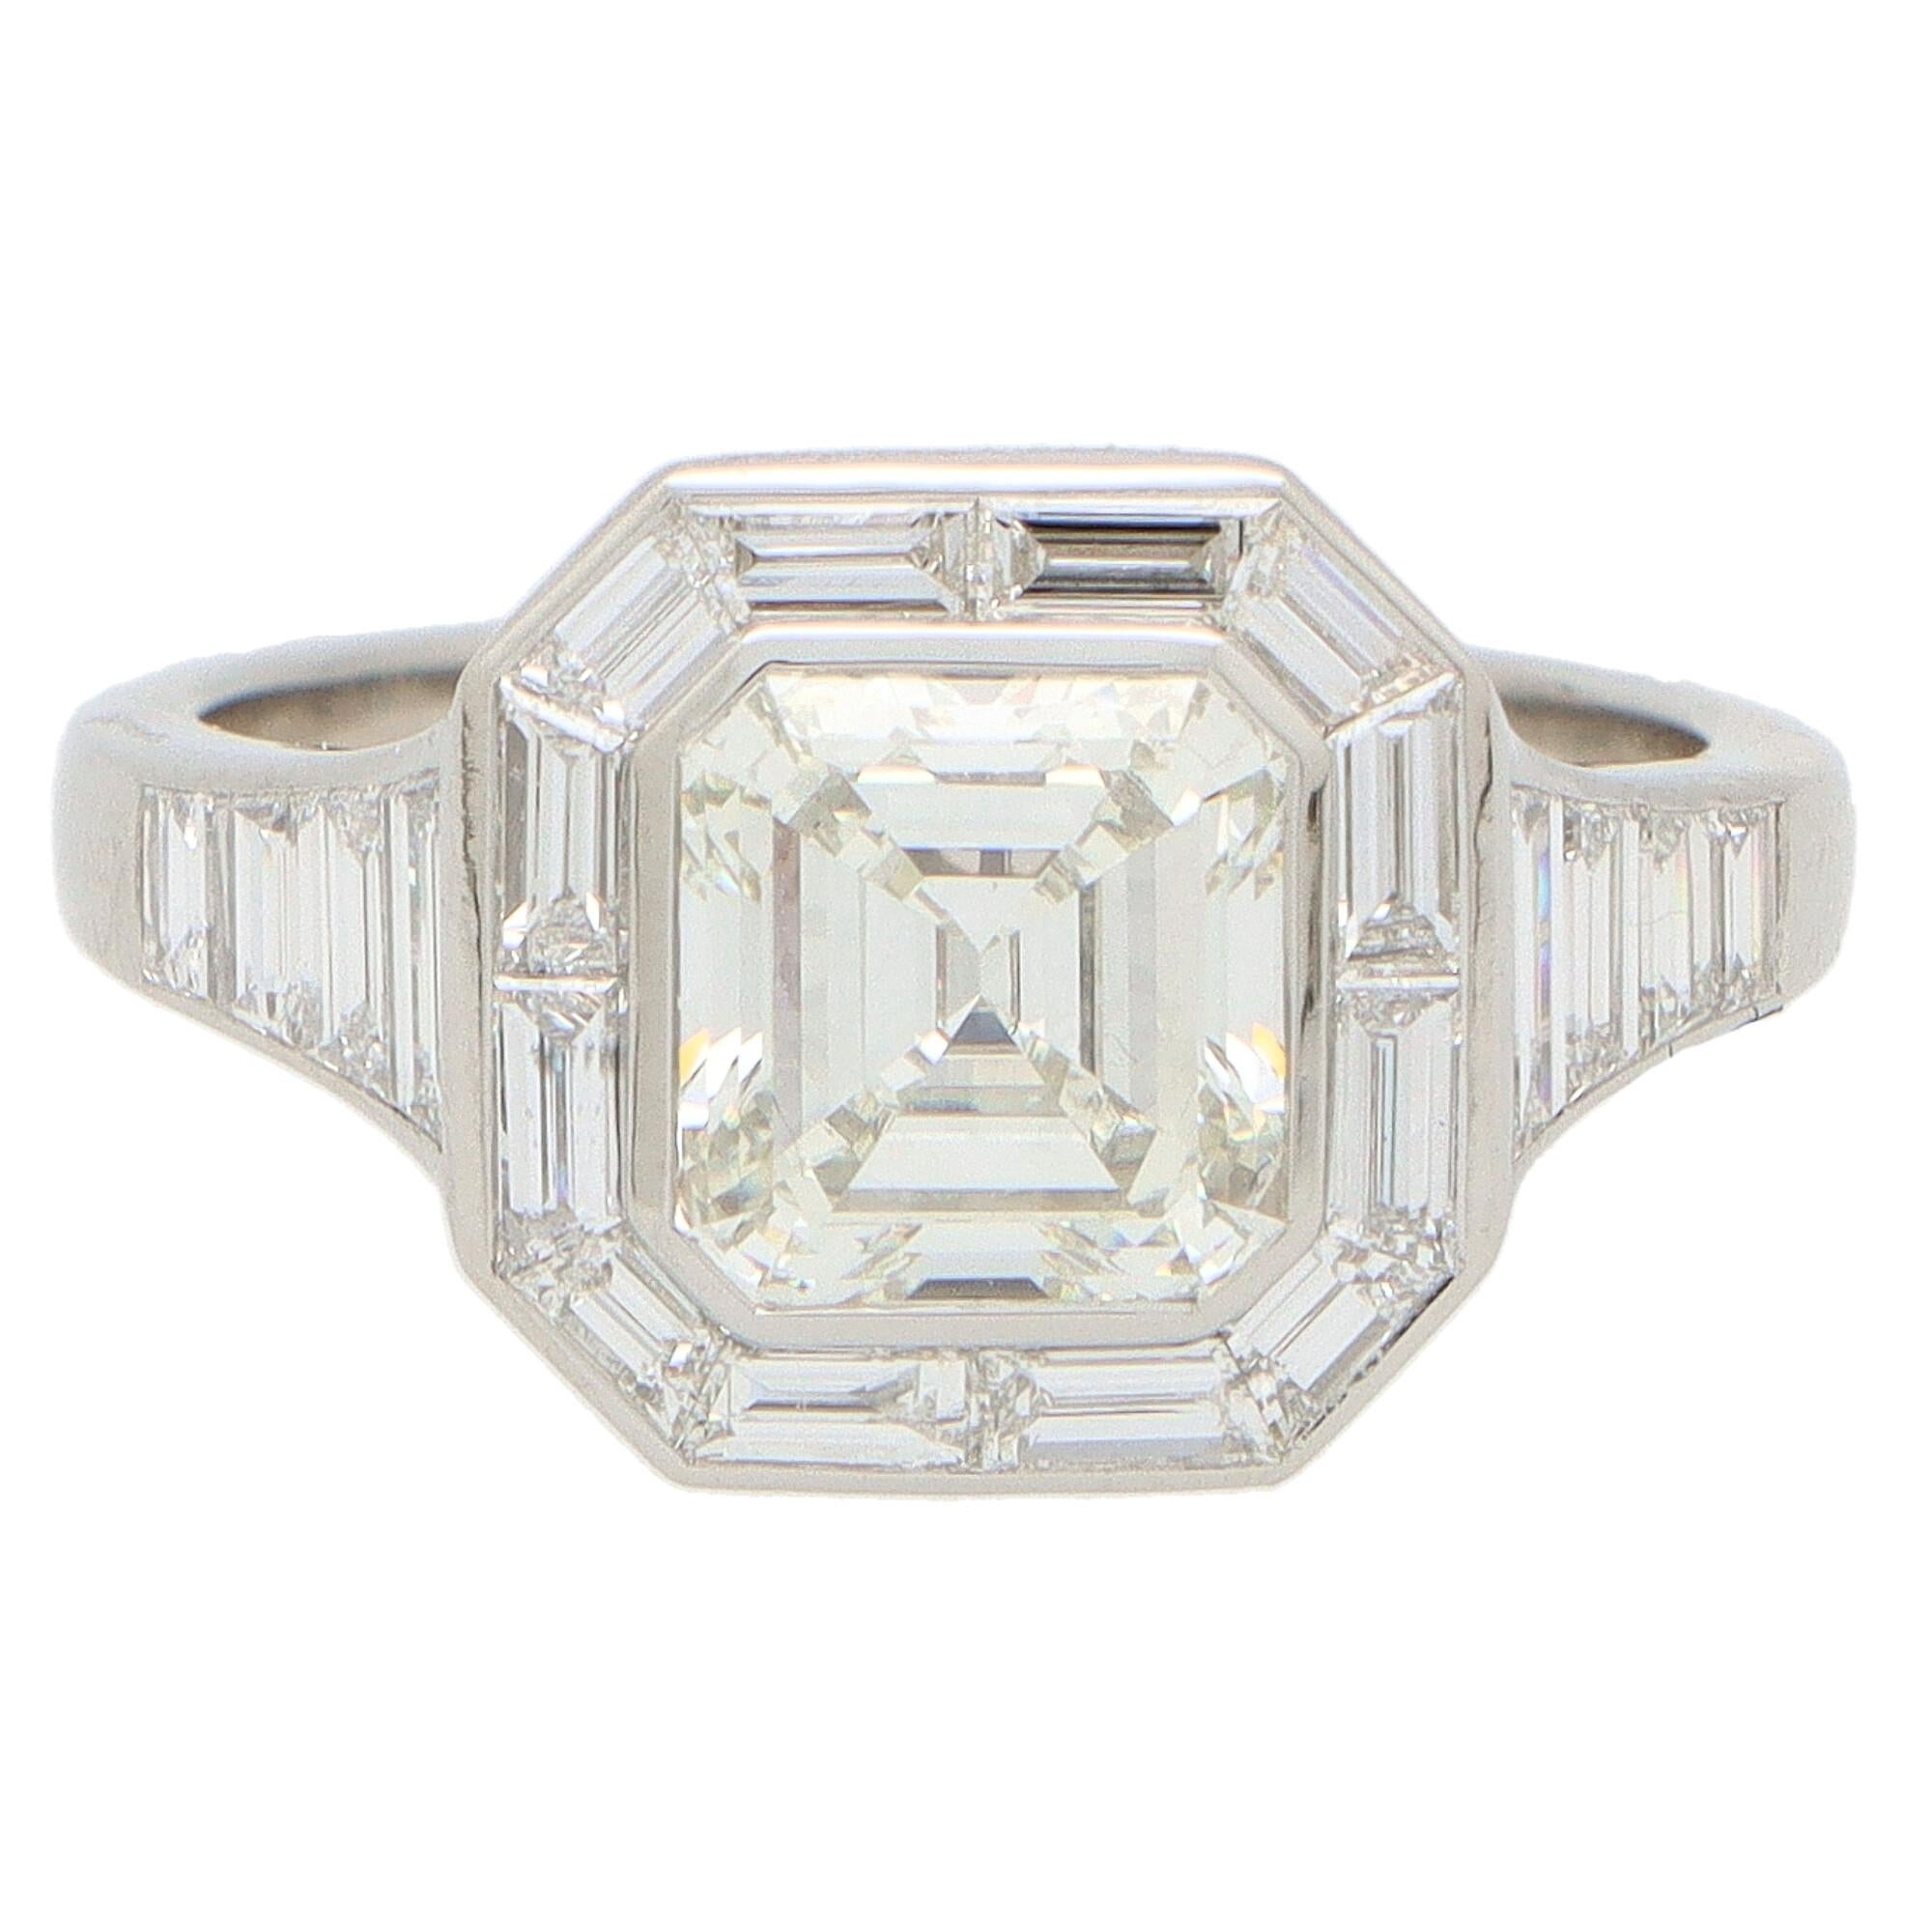 GIA Certified Art Deco Style Asscher Cut Diamond Ring